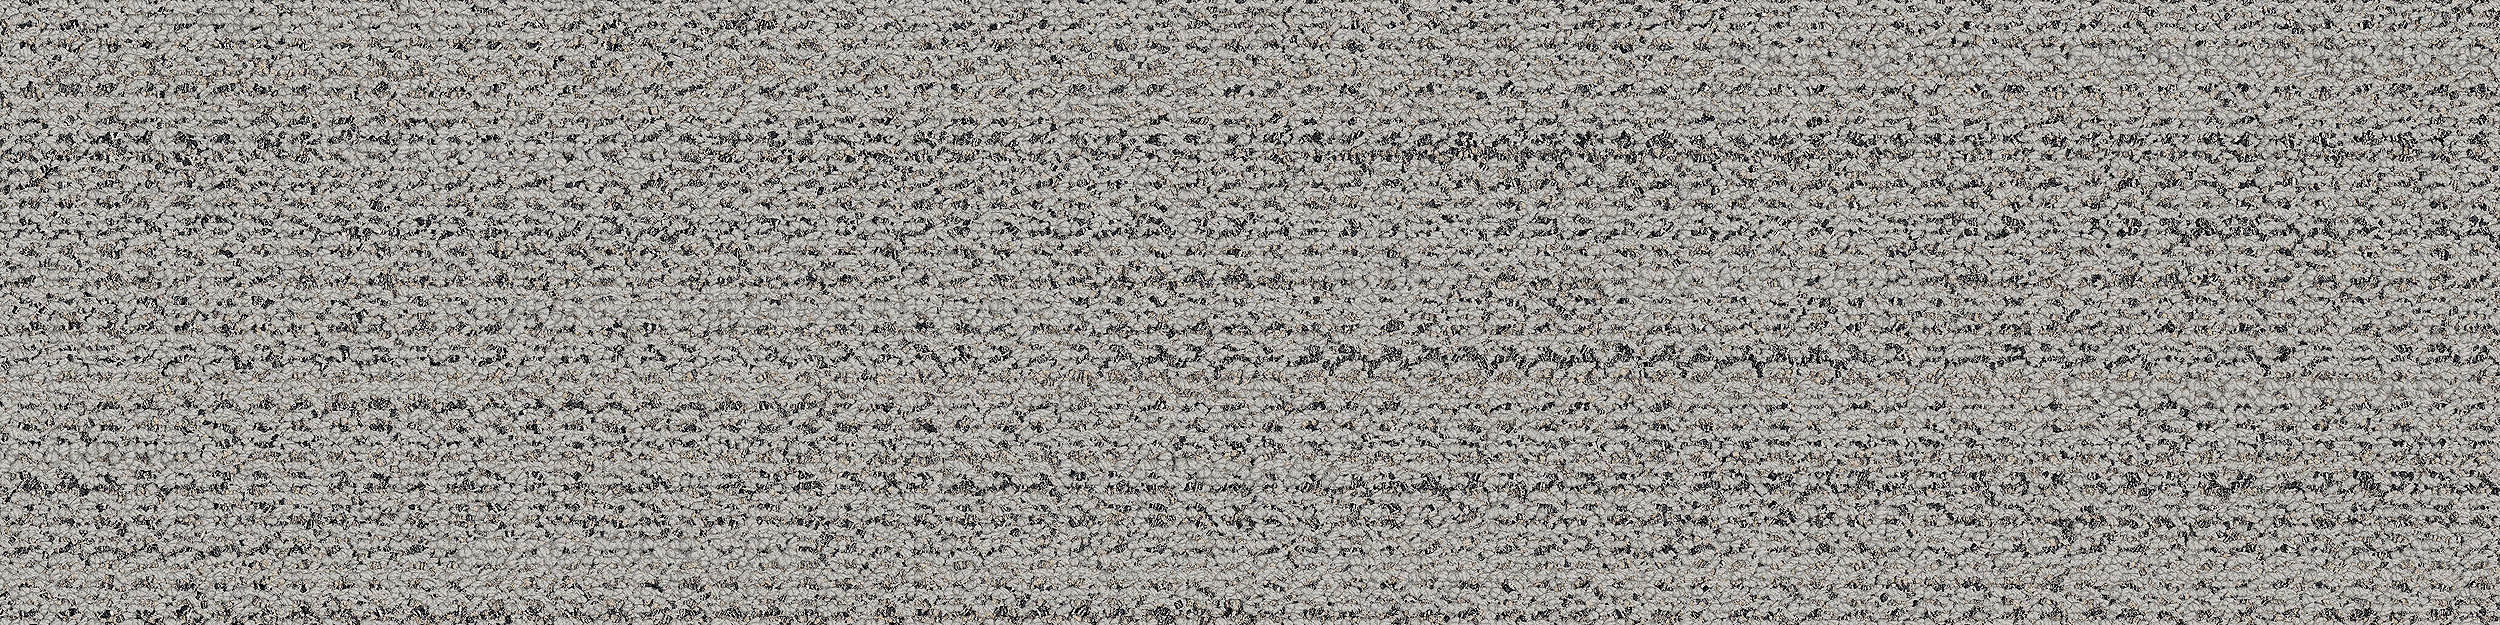 WW870 Carpet Tile In Linen Weft imagen número 9